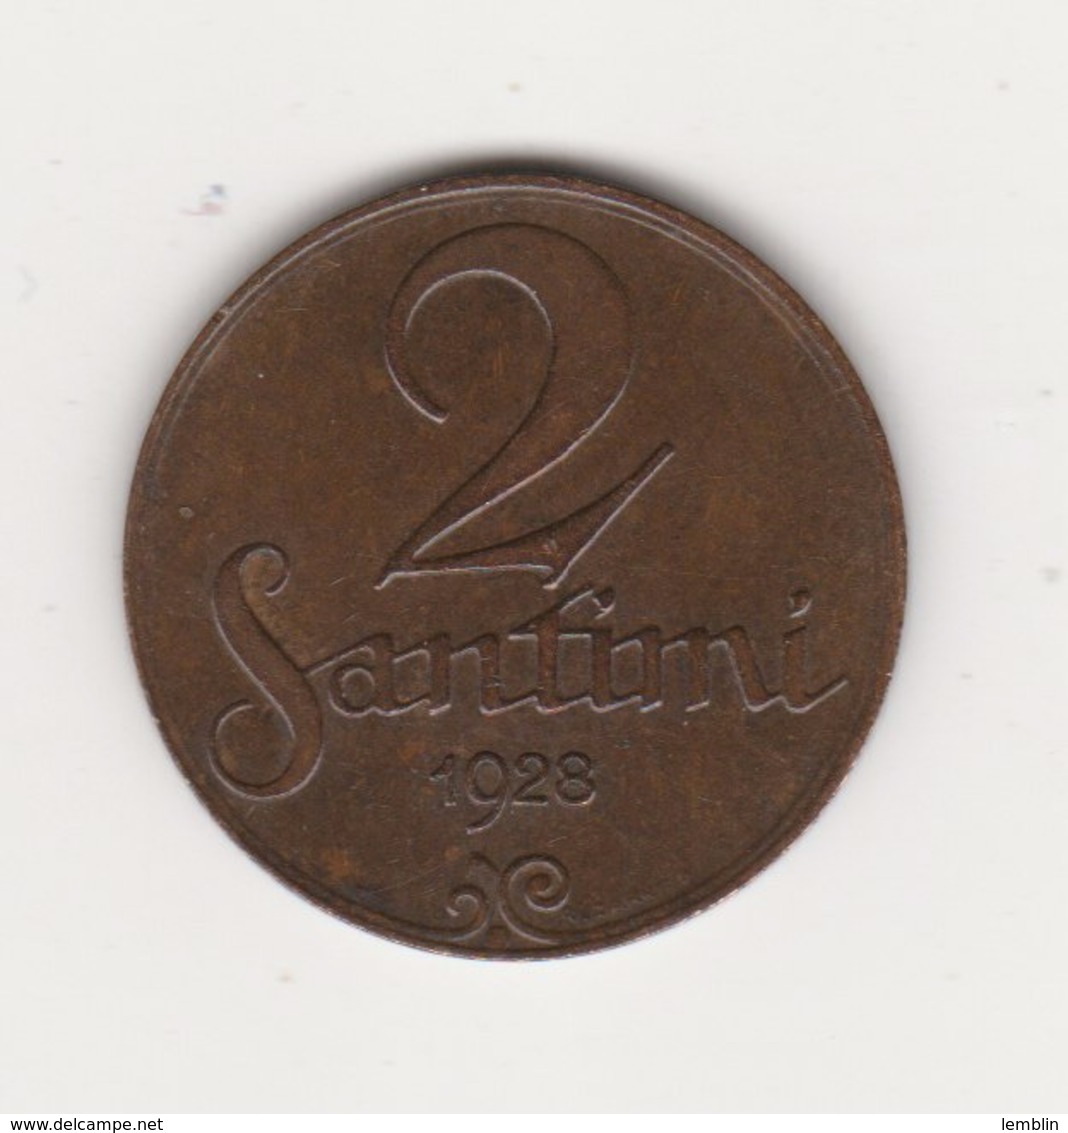 2 SANTIMI 1928 BRONZE - Letland